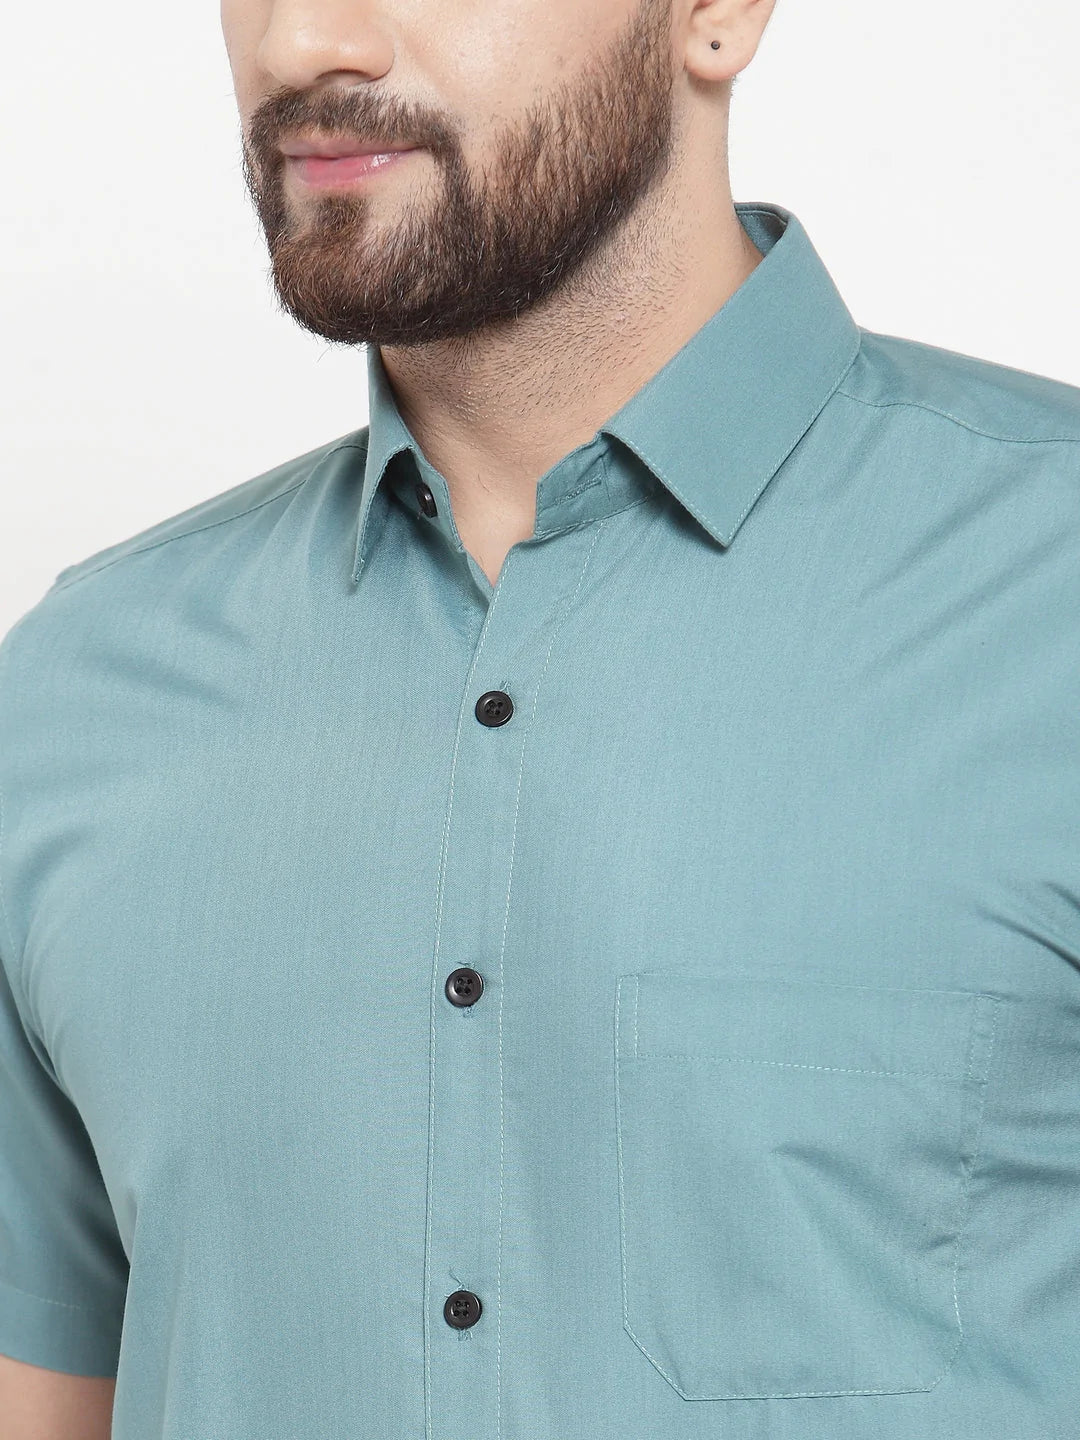 Jainish Green Men's Cotton Half Sleeves Solid Formal Shirts ( SF 754Aqua )